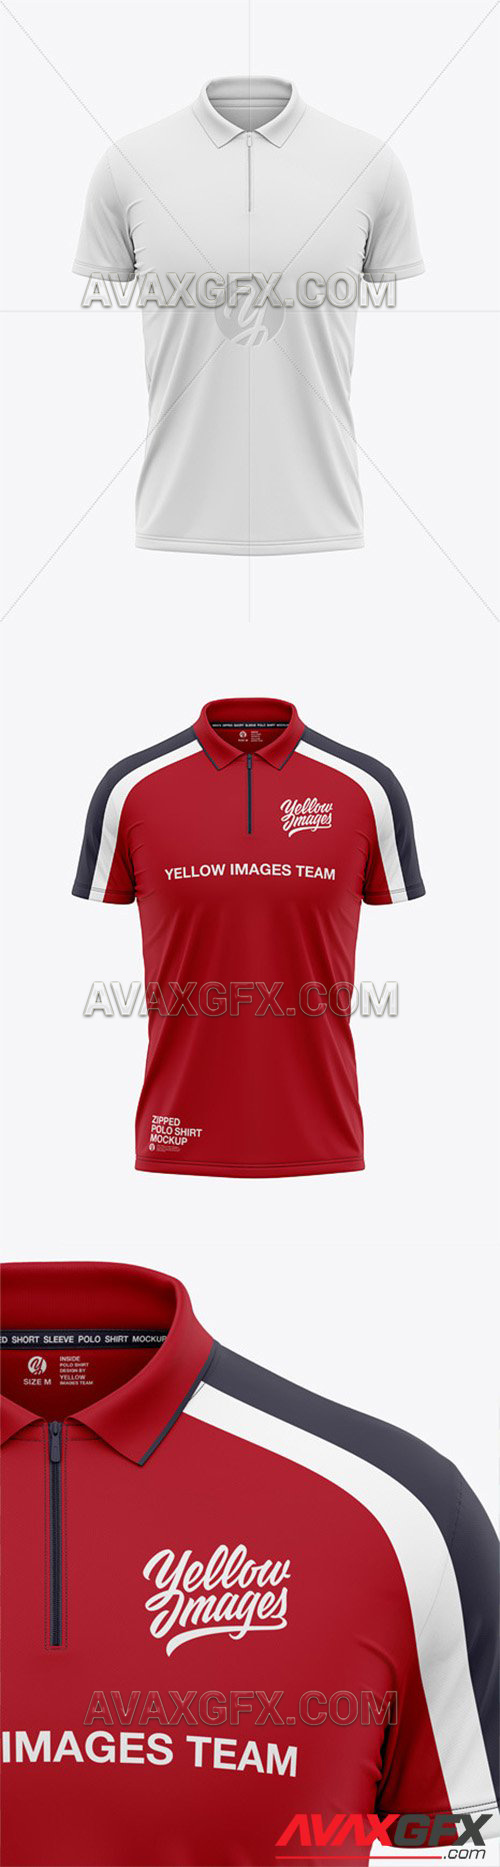 Download Men's Zip Neck Polo Shirts Mockup 58403 » AVAXGFX - All ...